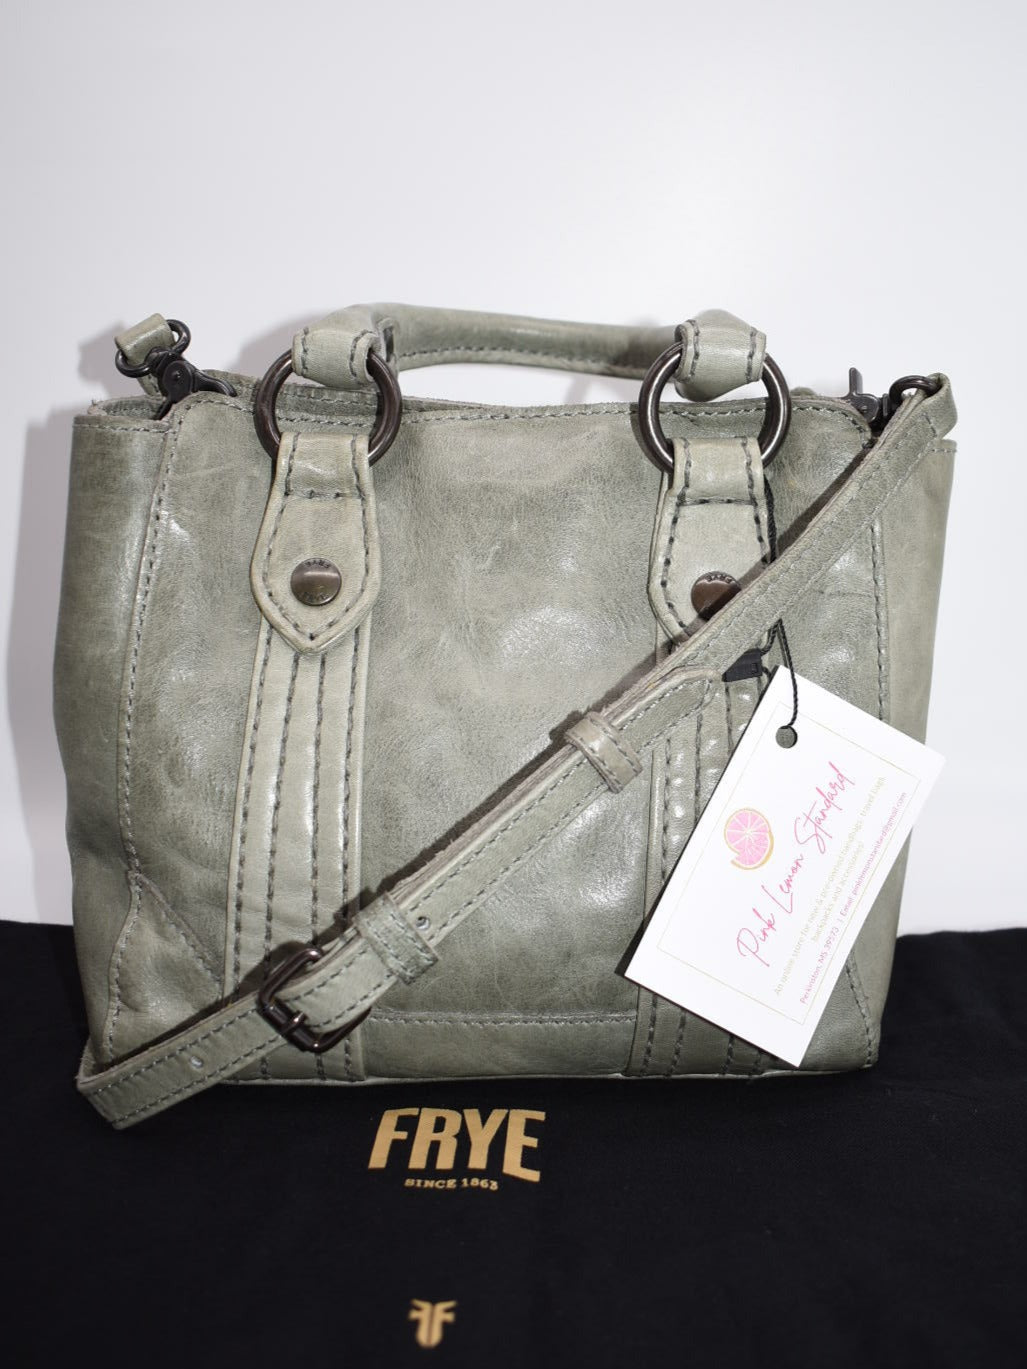 Frye Melissa Mini Tote Crossbody Bag in Fern